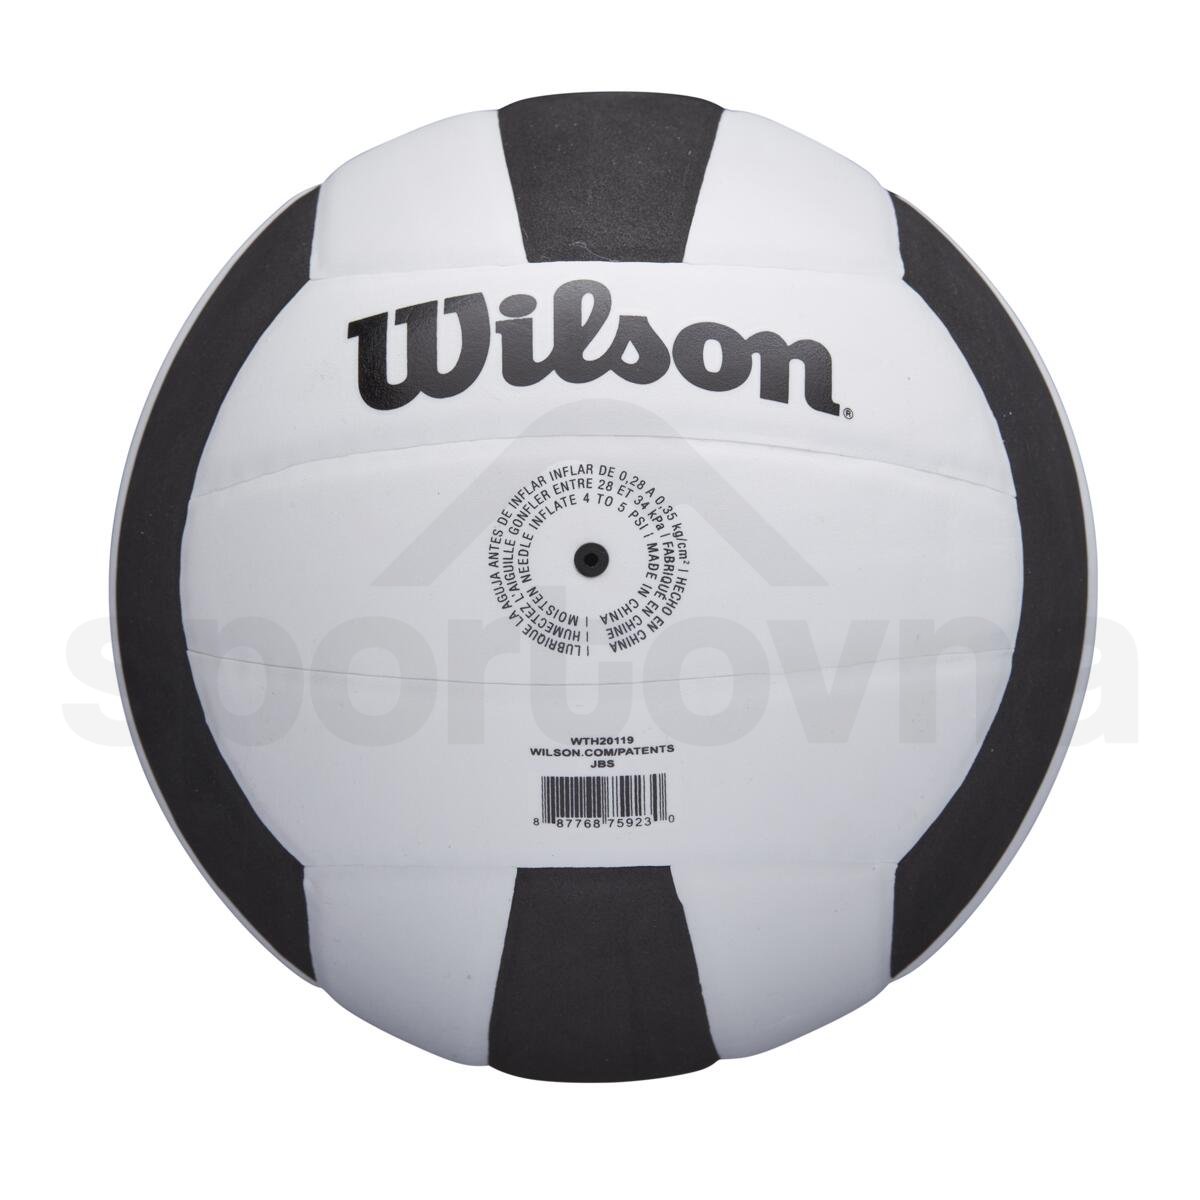 Míč Wilson Pro Tour Vb - černá/bílá